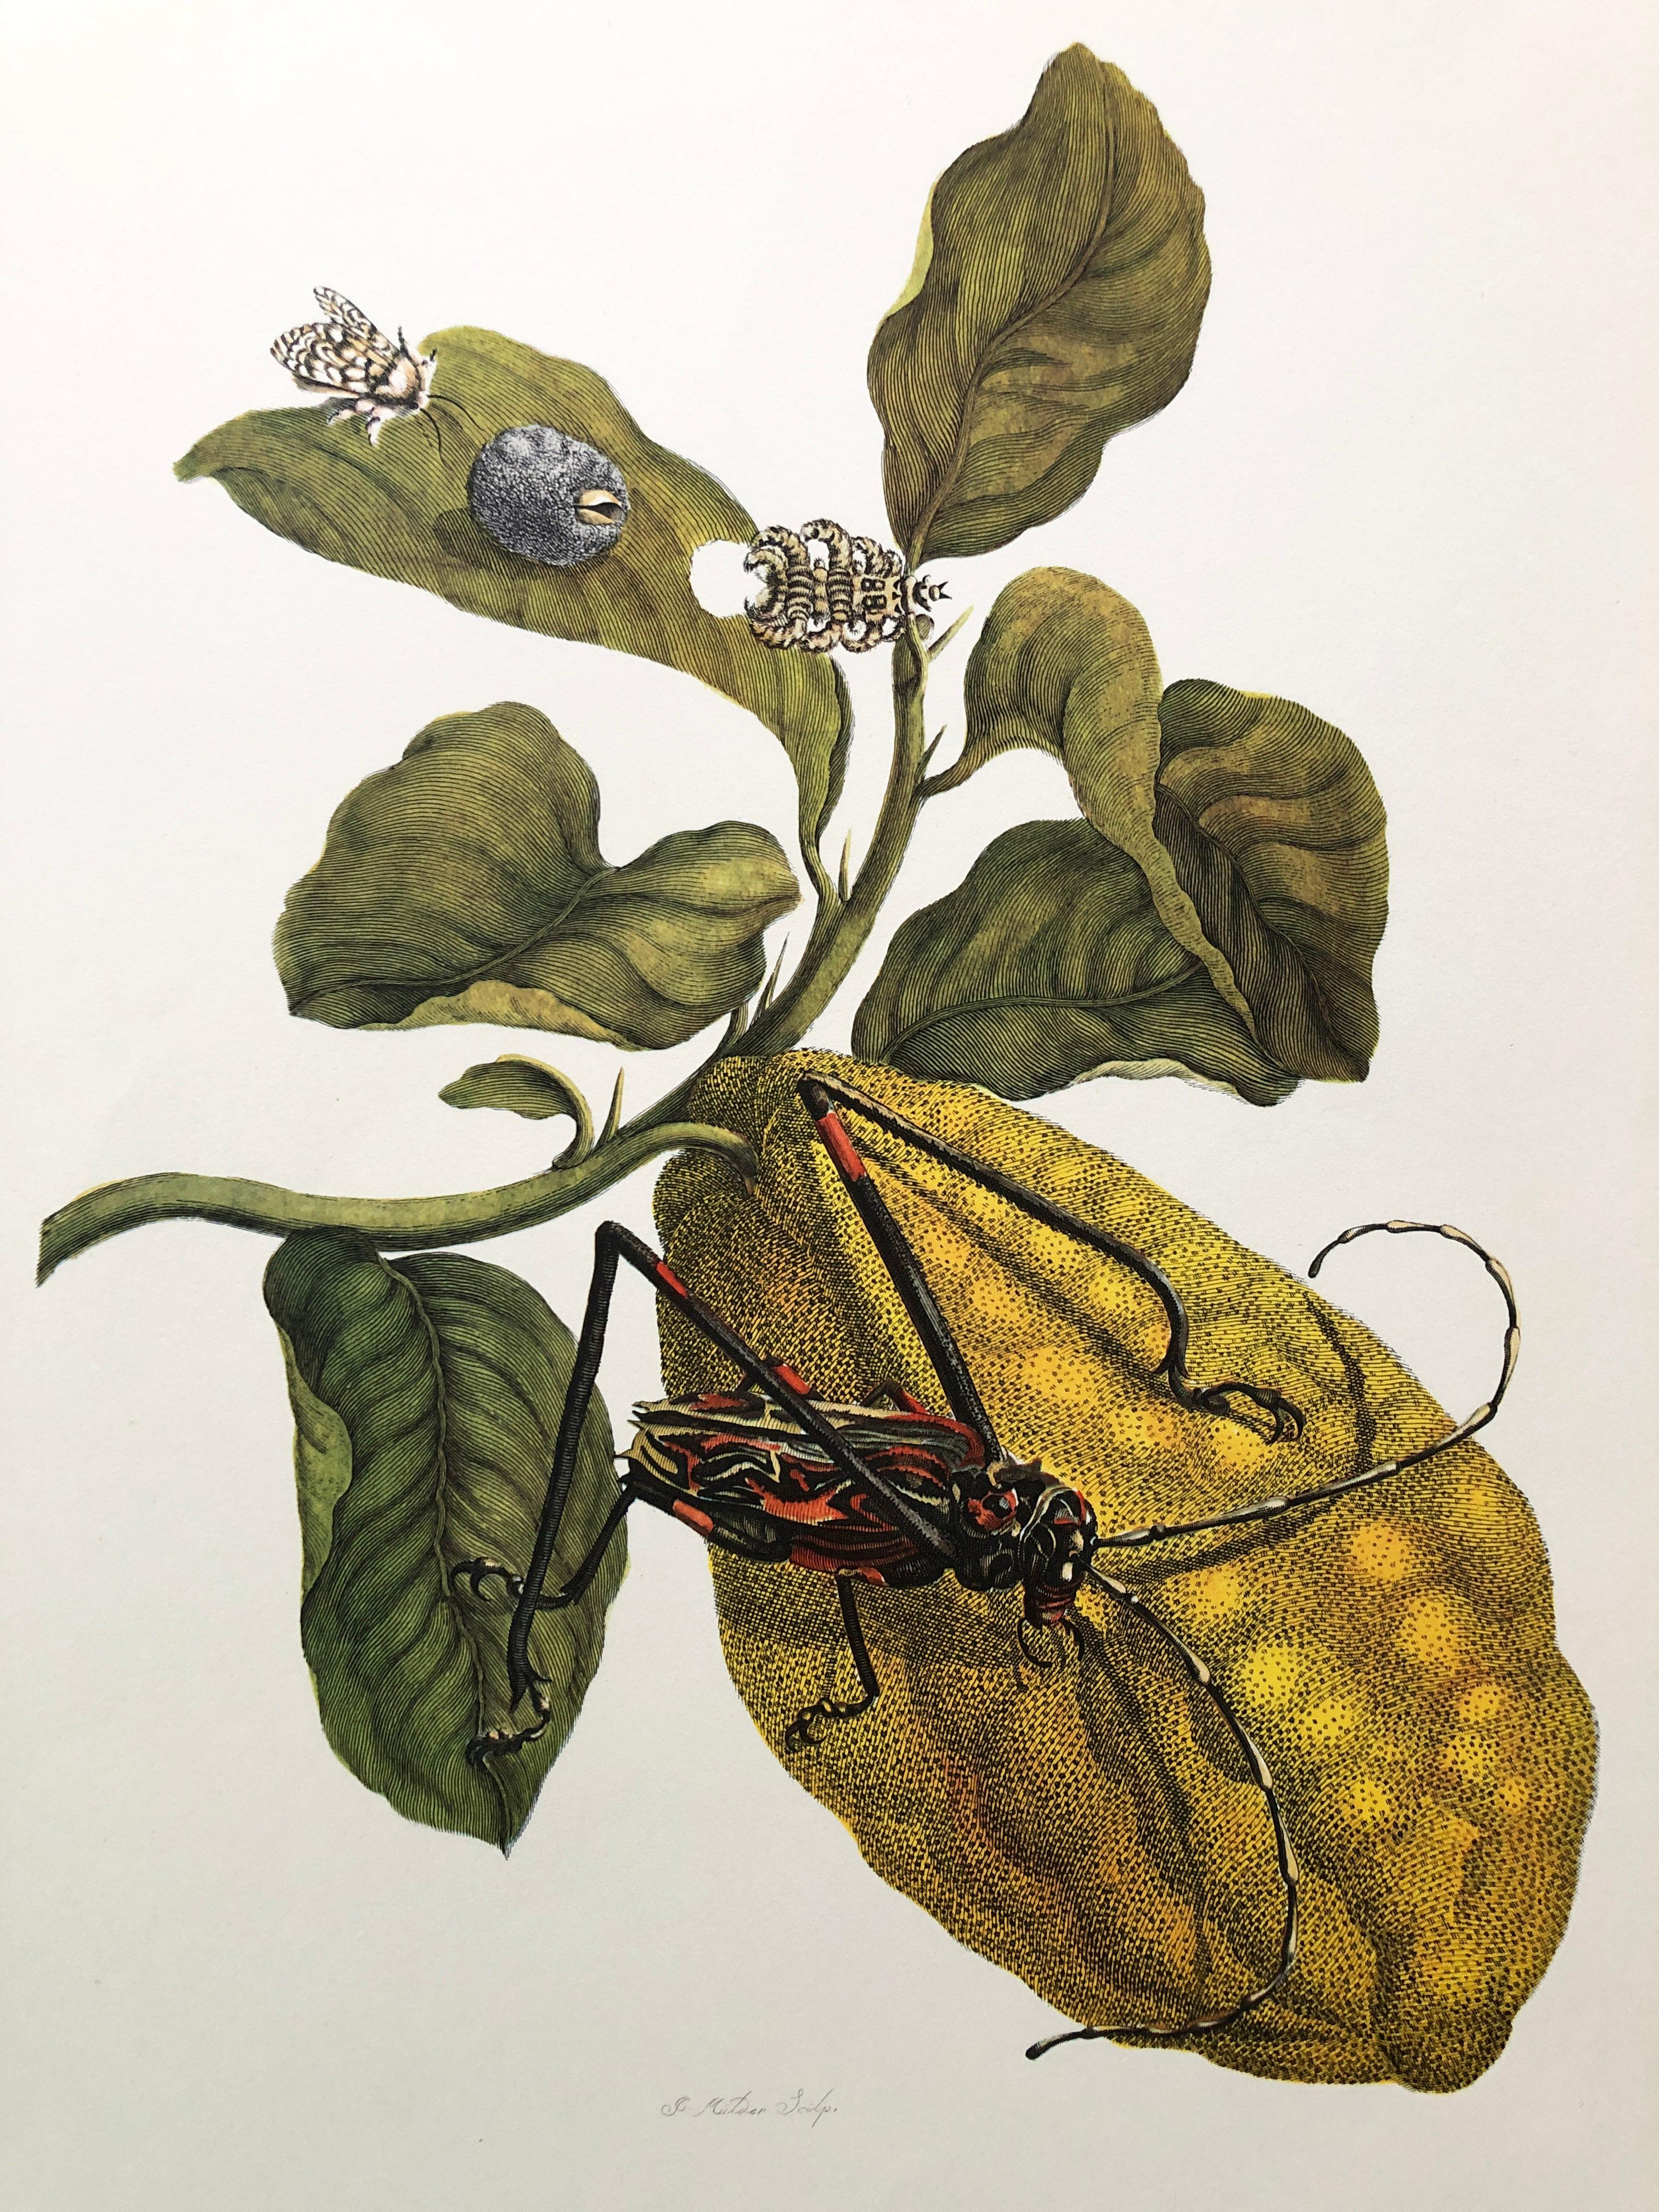 Other Maria Sibylla Merian - J. Mulder - Citron and longhorn beetle Nr. 28 For Sale